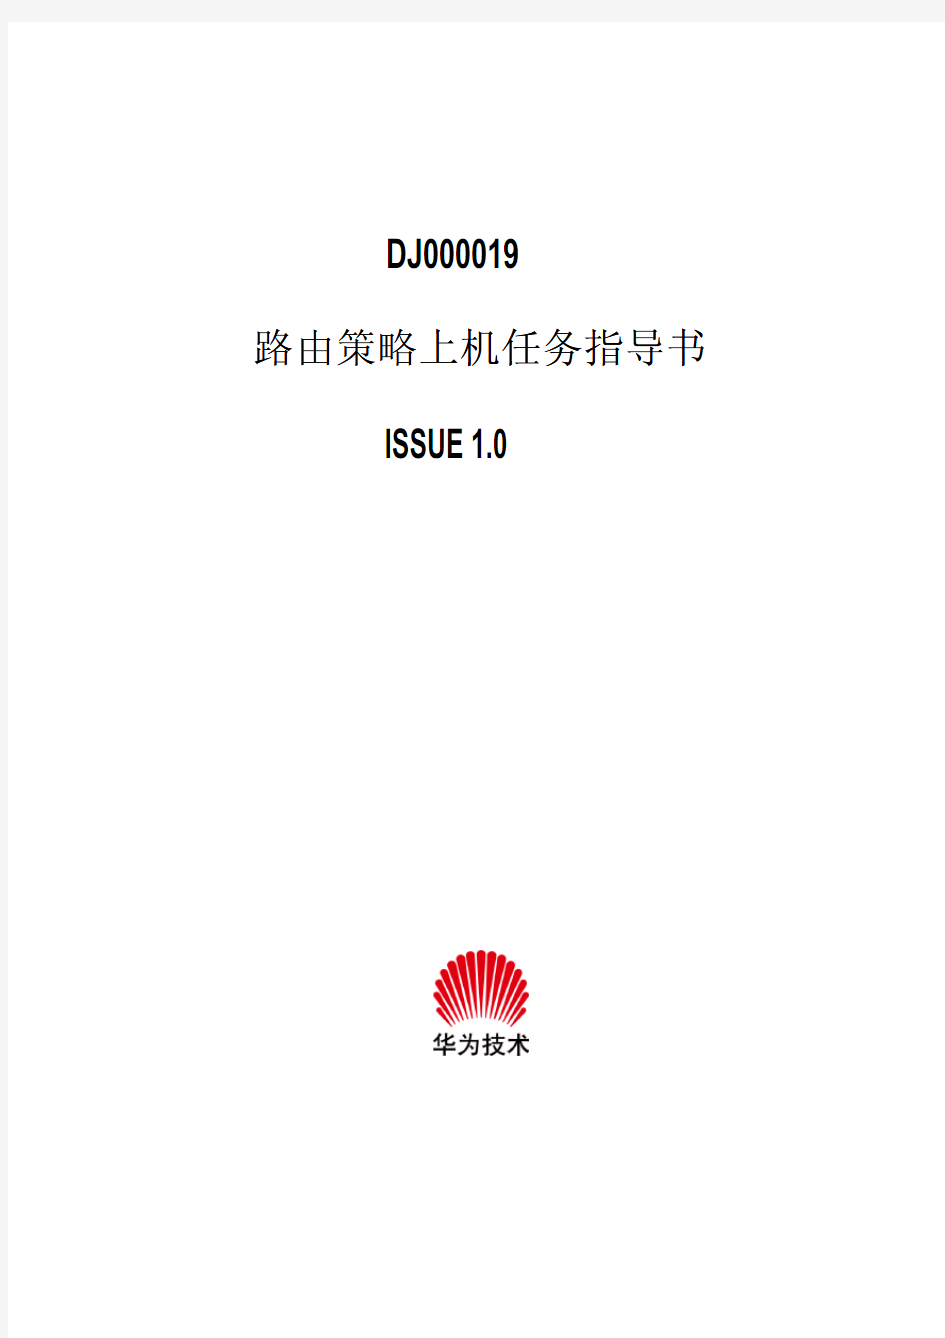 DJ000019 路由策略上机任务指导书 ISSUE 1.0